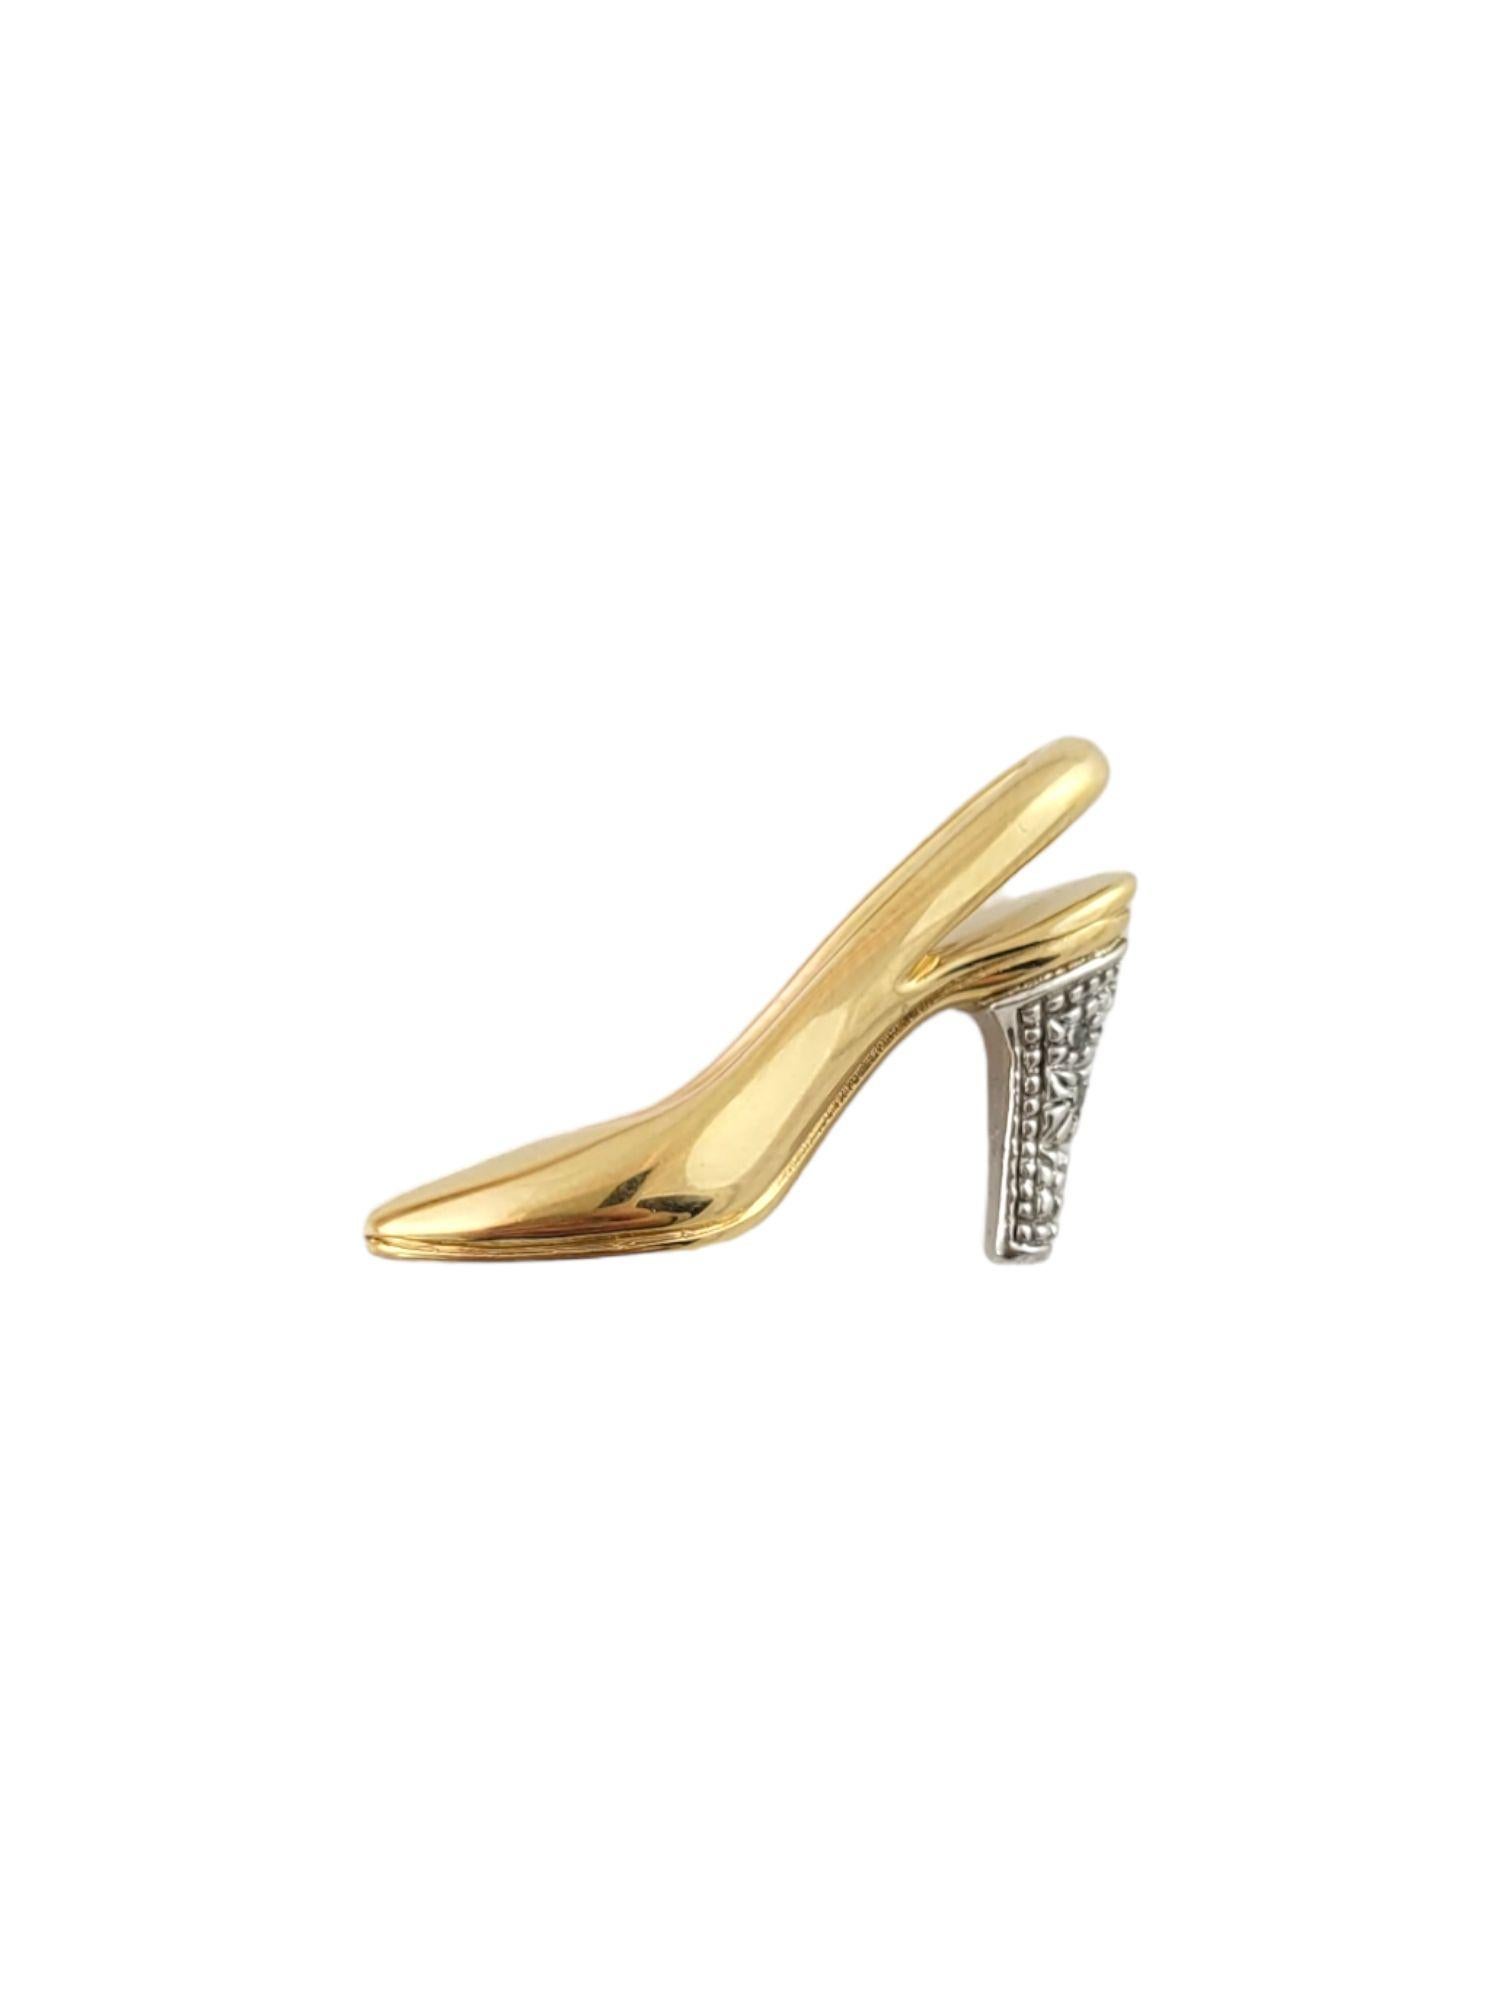 Round Cut 4k Yellow Gold Diamond High Heel Stiletto Pendant For Sale